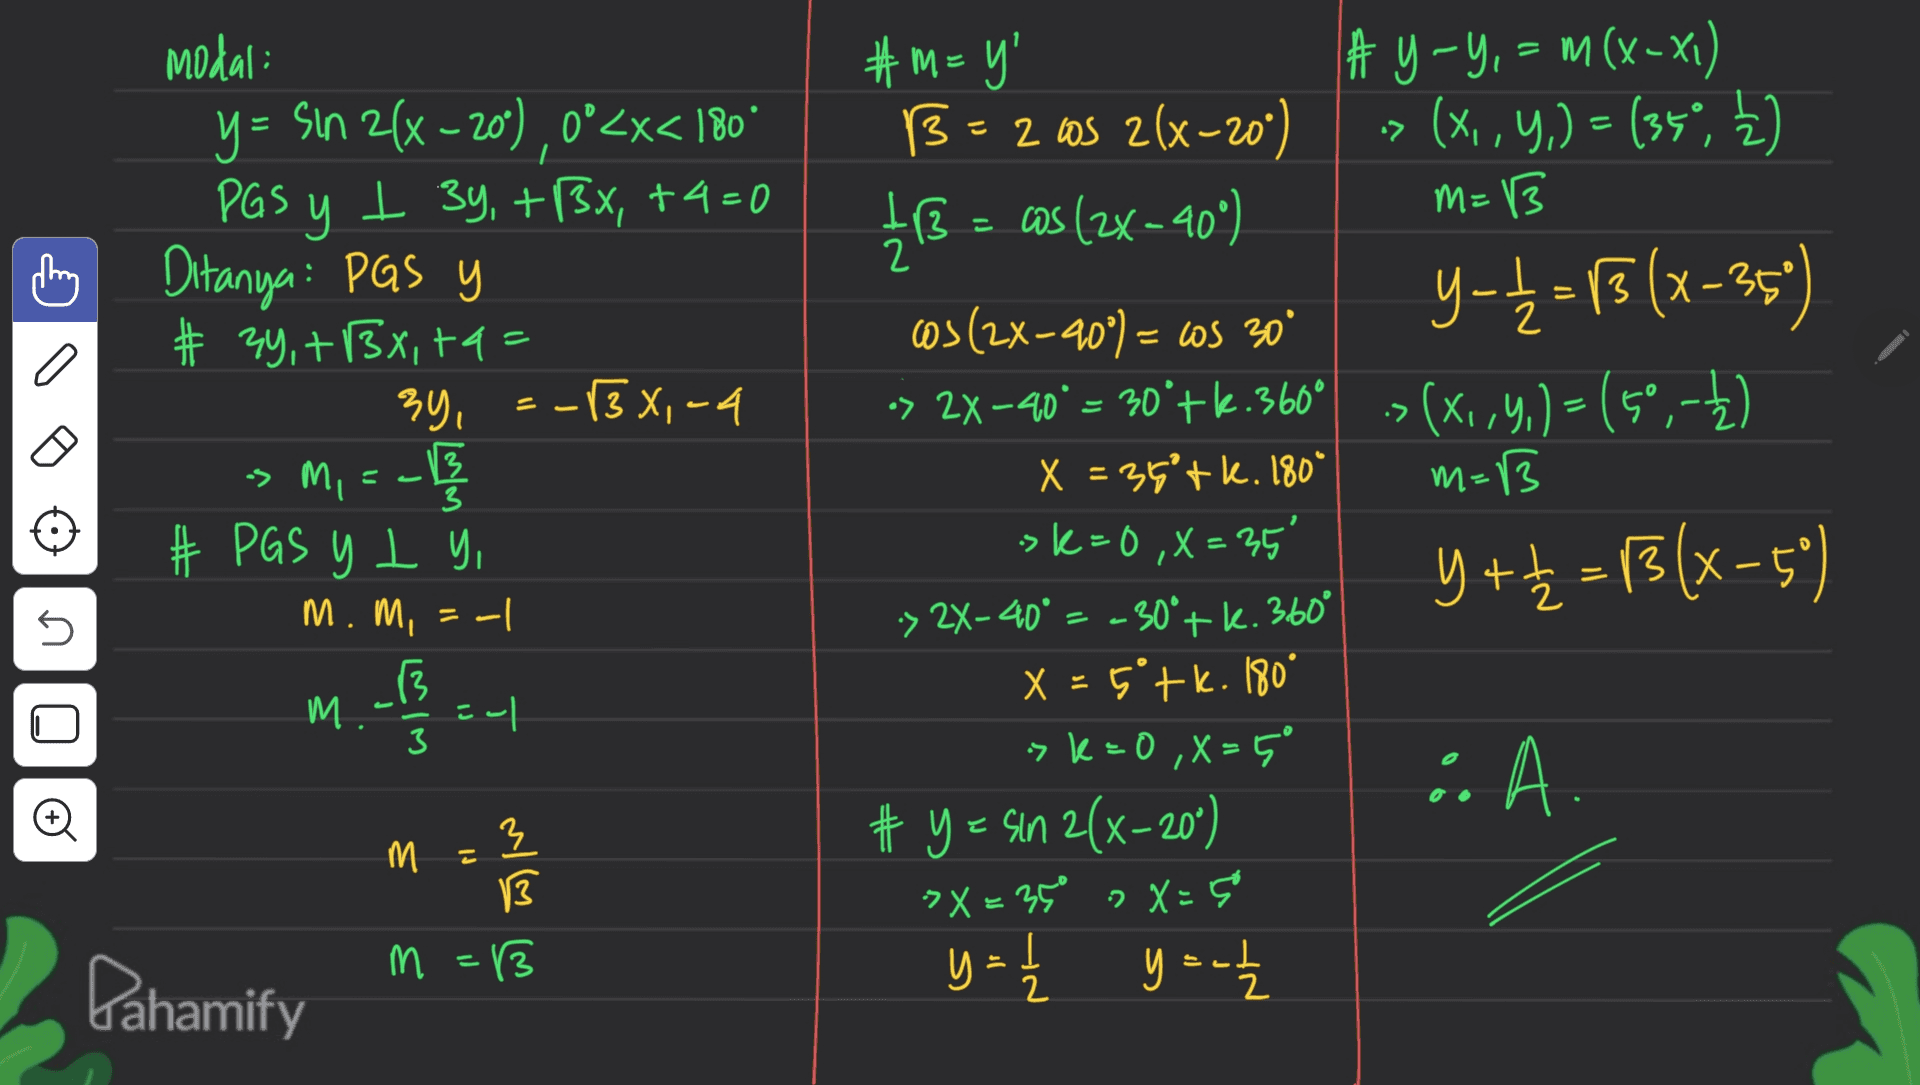 = = X- 3 Modal: y = Sin 2(x - 20), 0°<x< 180° PGS у y I 34, +13x, +4= 0 m Ditanya: PGS y # 34, +1Bx, +4 = 34, :-(3x,-4 sm, =-117 13 # PGS y L y, m.mi = -1 니 13 m. 1 a : = . mi m=13 3 #m=y' # y - Y, = m (x - x1) B=2 as 2(x-20°) -> (X, Y,) = (35°, ķ) 413 = – cos (2x - 40°) M=13 2 cos (2x-20°) = ls 30 y-t=13 (x-35) •> 2X-40° = 30'tk.360° > (X164.) = (50,-) ,,( X = 35'tk. 180* sk=0 ,X = 35' Y + = 13(x–50) -> 2X-40 = -30° + k. 360° X = 5+k. 180° sk=0,X=5° • A. # y = sin 2(x-20°) > X = 350 » X=5 y = 1/4 y = - = 5 M LIM 3 و m = 3 13 3 13 . Pahamify 2 